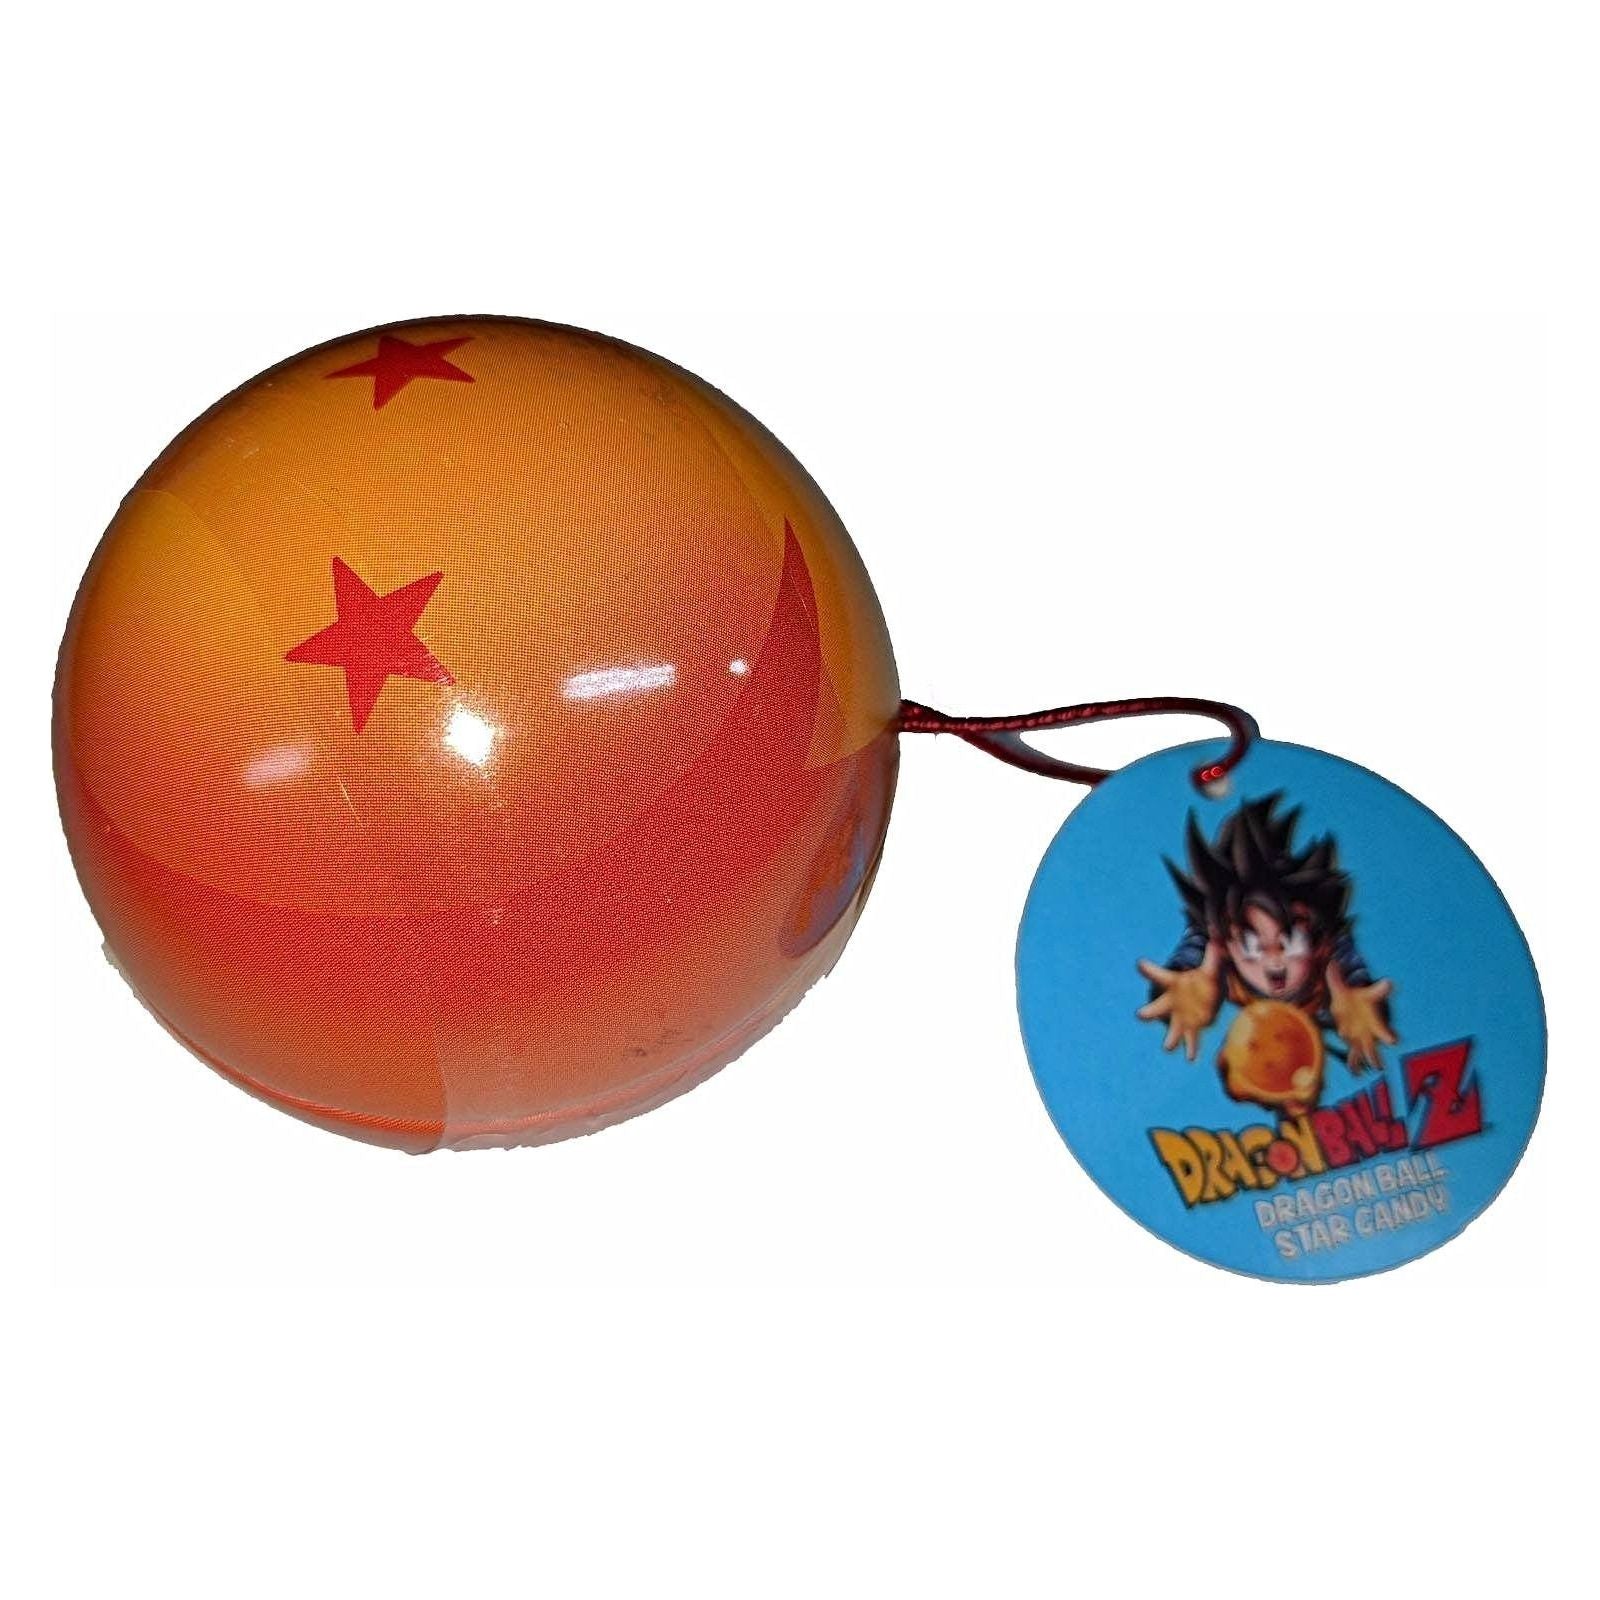 BONBON - Dragon Ball Z Dragon Ball Star Bonbon